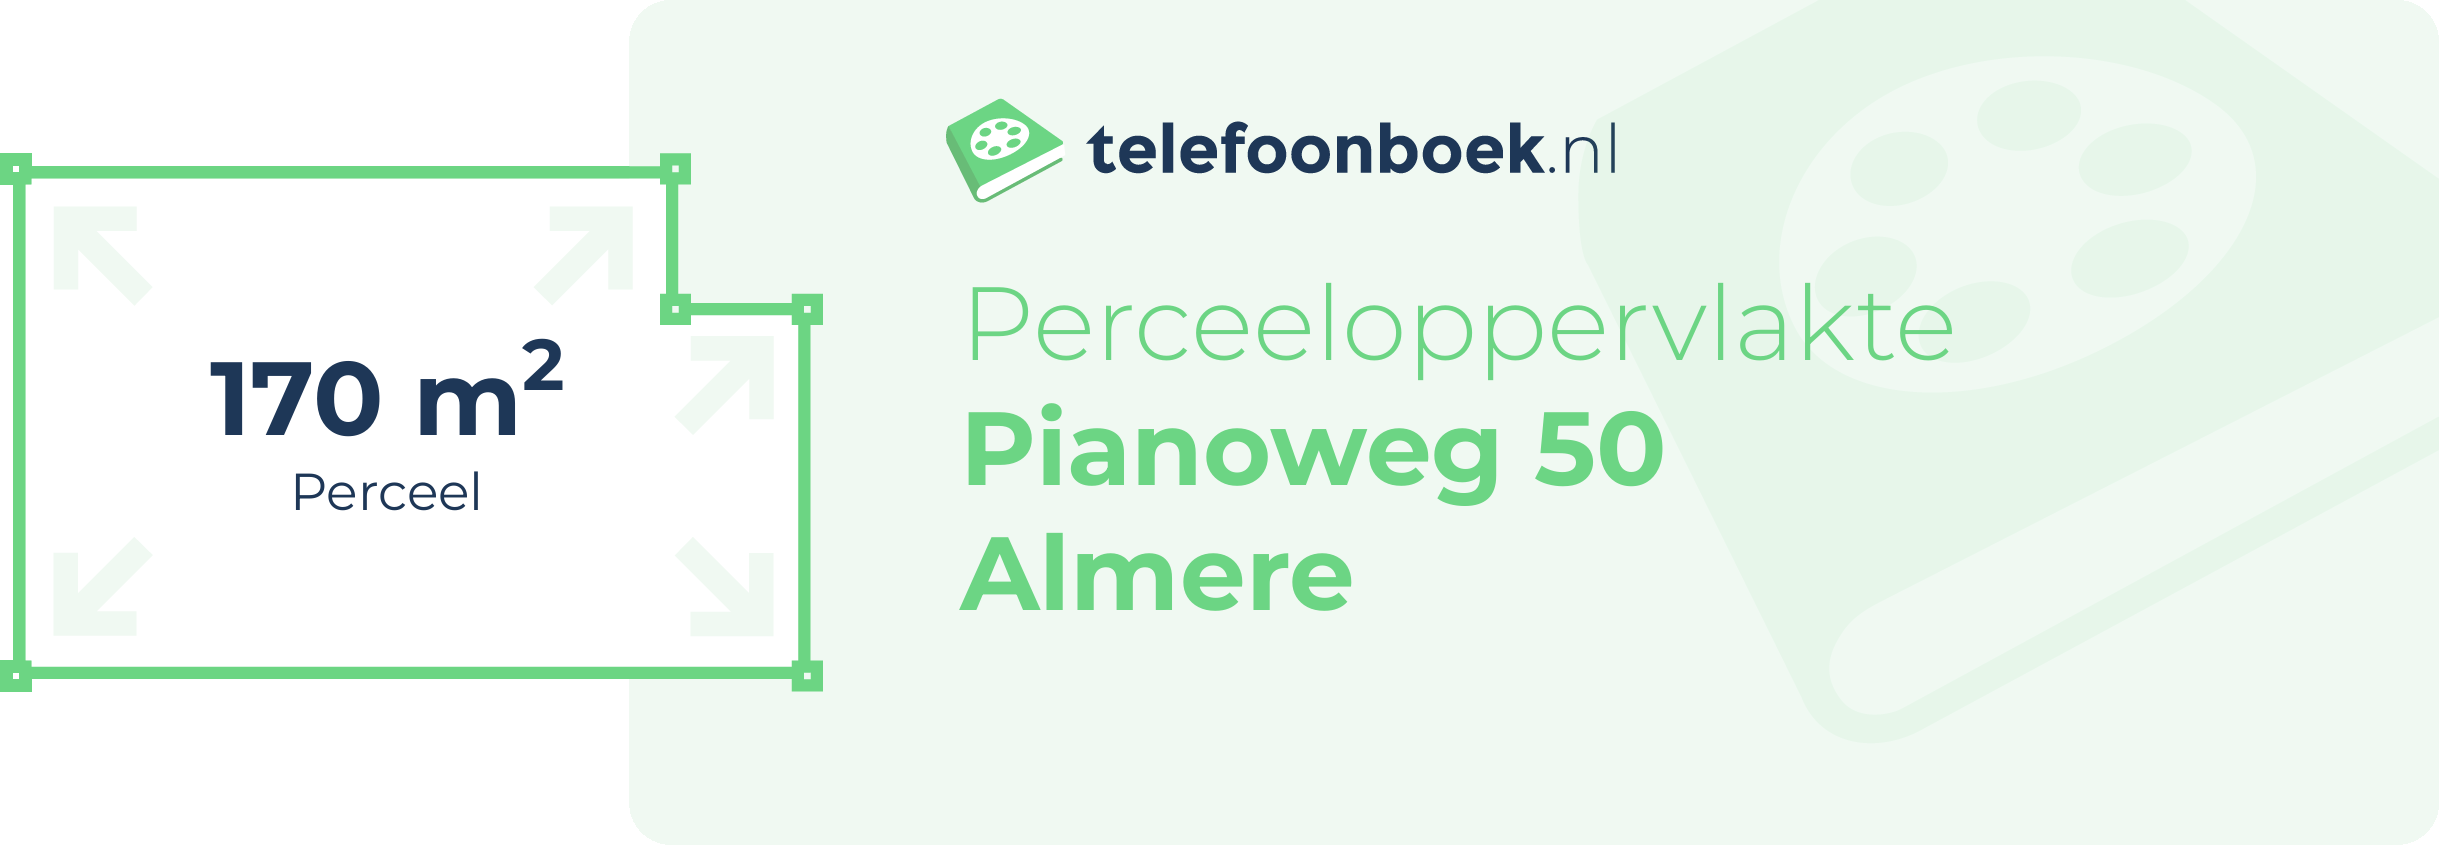 Perceeloppervlakte Pianoweg 50 Almere